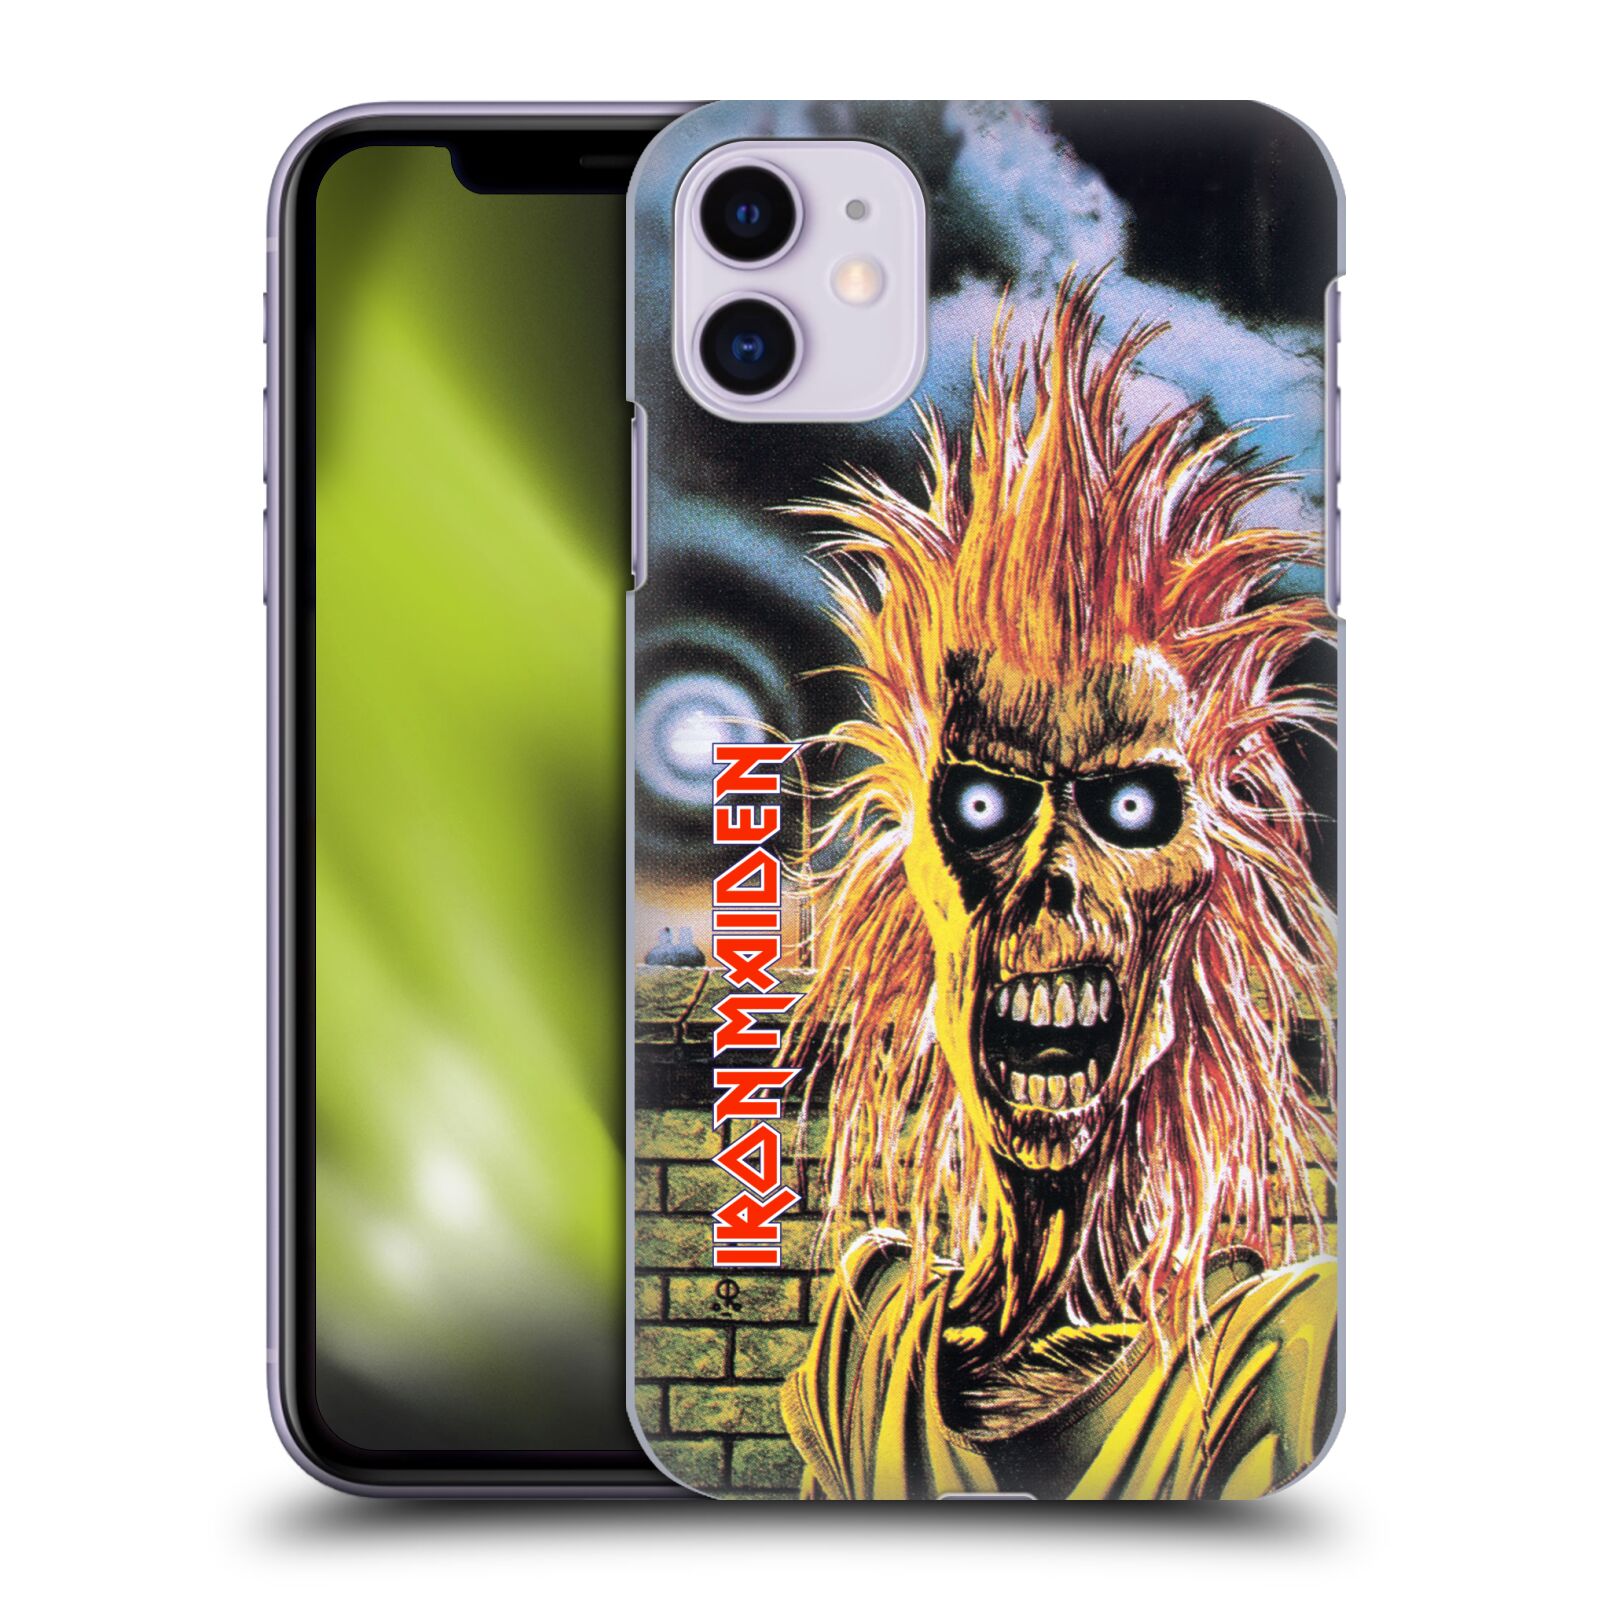 Pouzdro na mobil Apple Iphone 11 - HEAD CASE - Heavymetalová skupina Iron Maiden punker